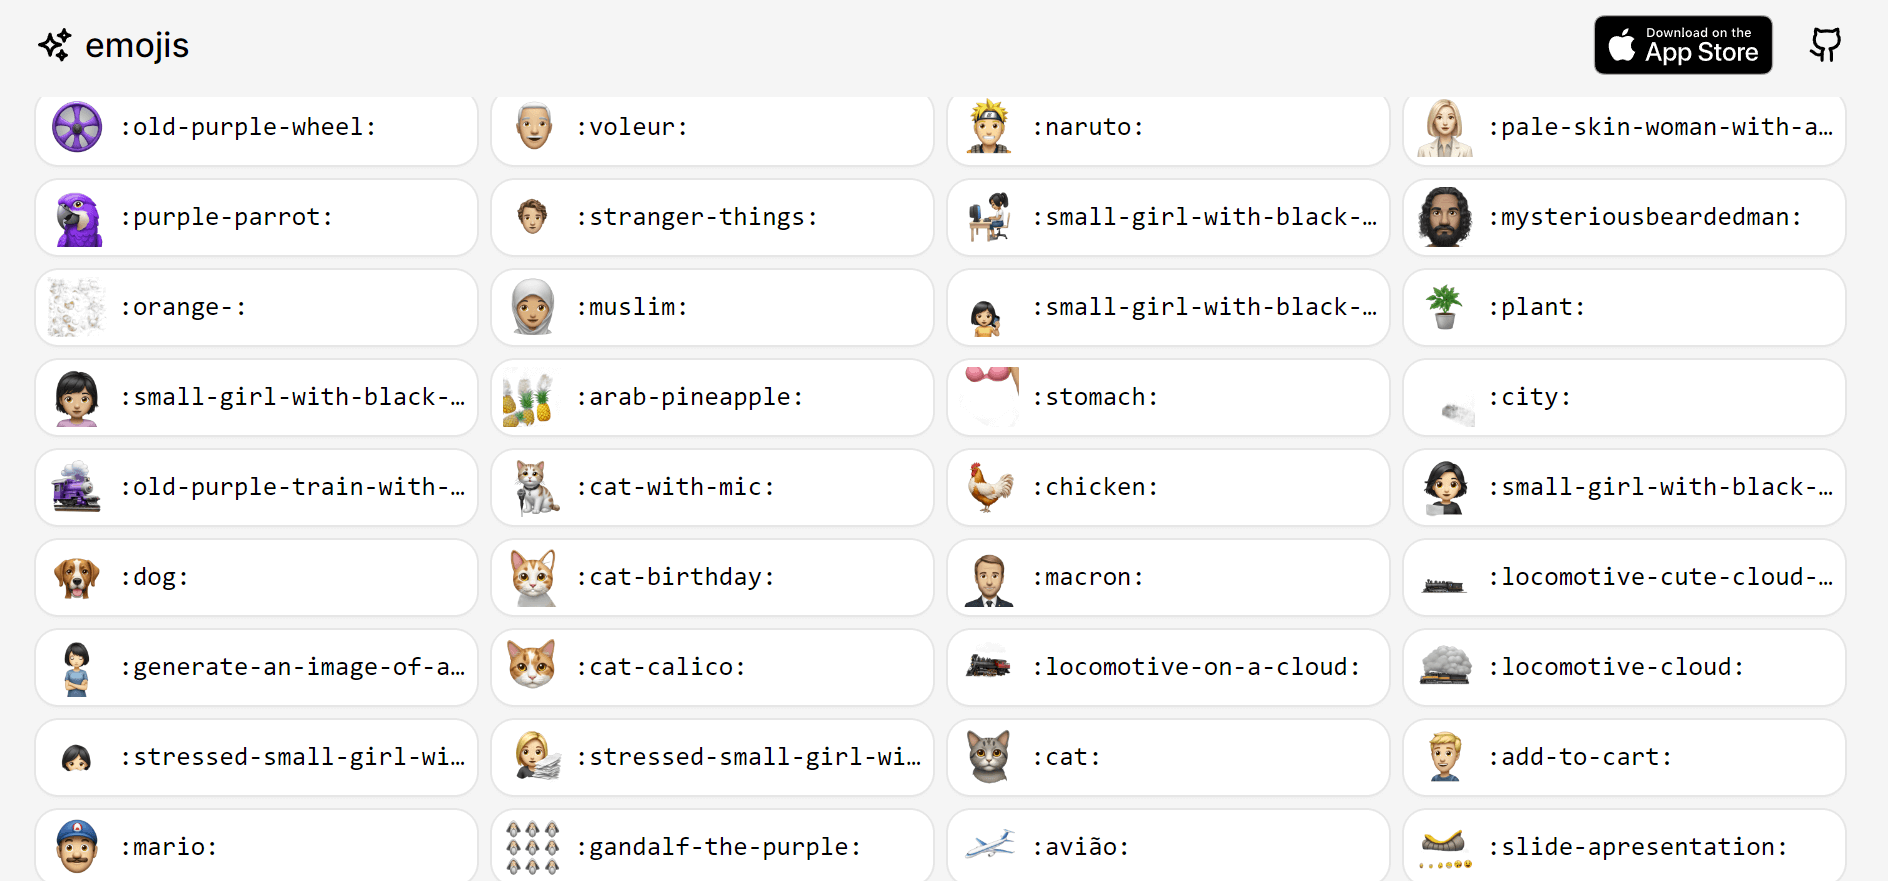 Exemples d'emojis via l'outil d'intelligence artificielle, Emoji.sh